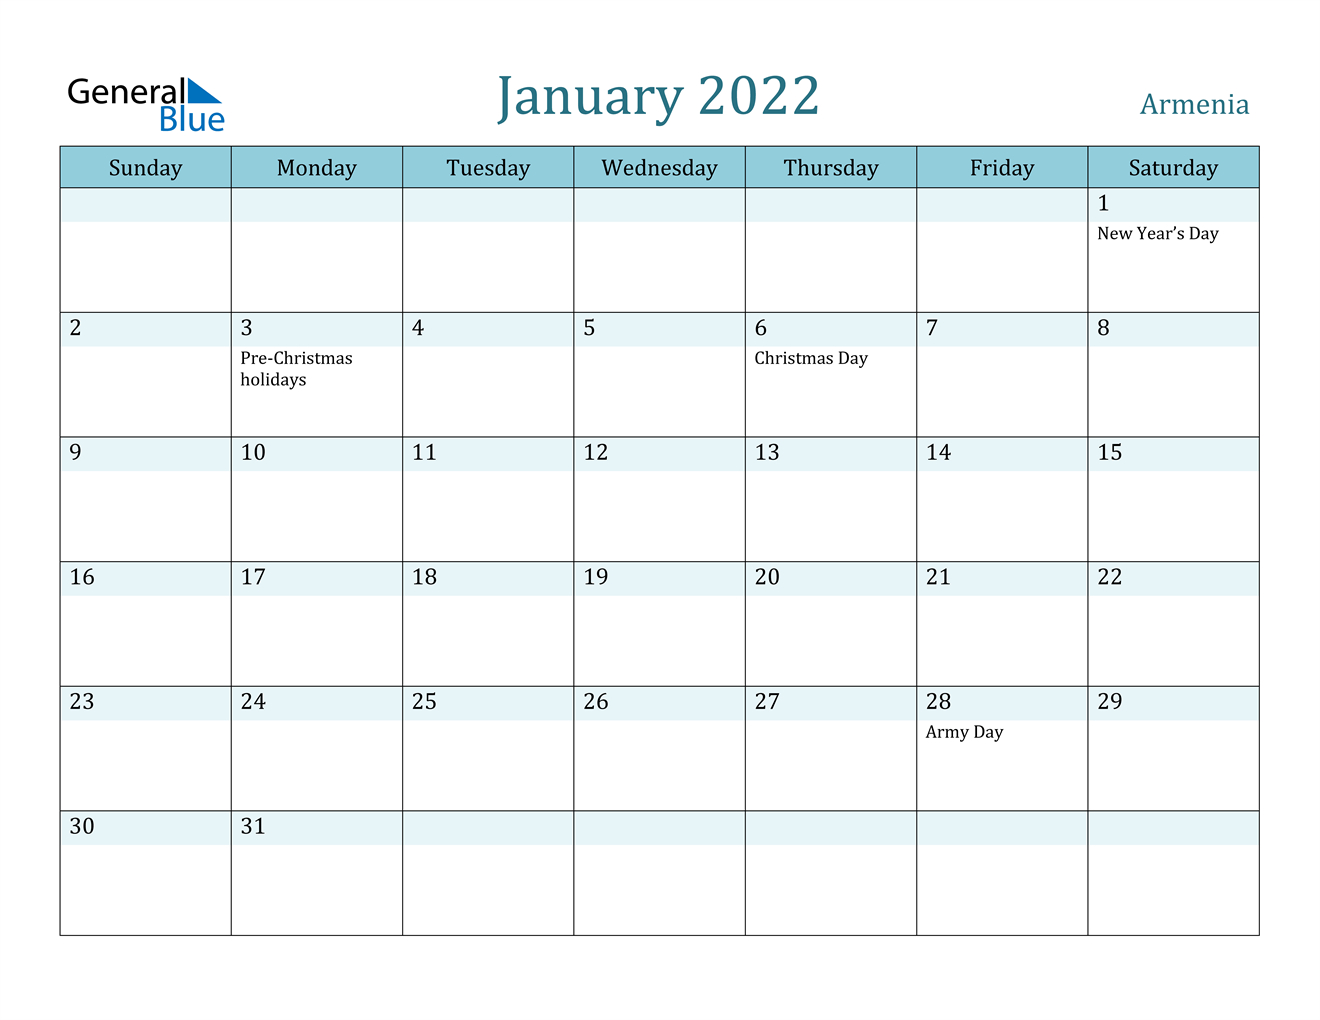 January 2022 Calendar - Armenia